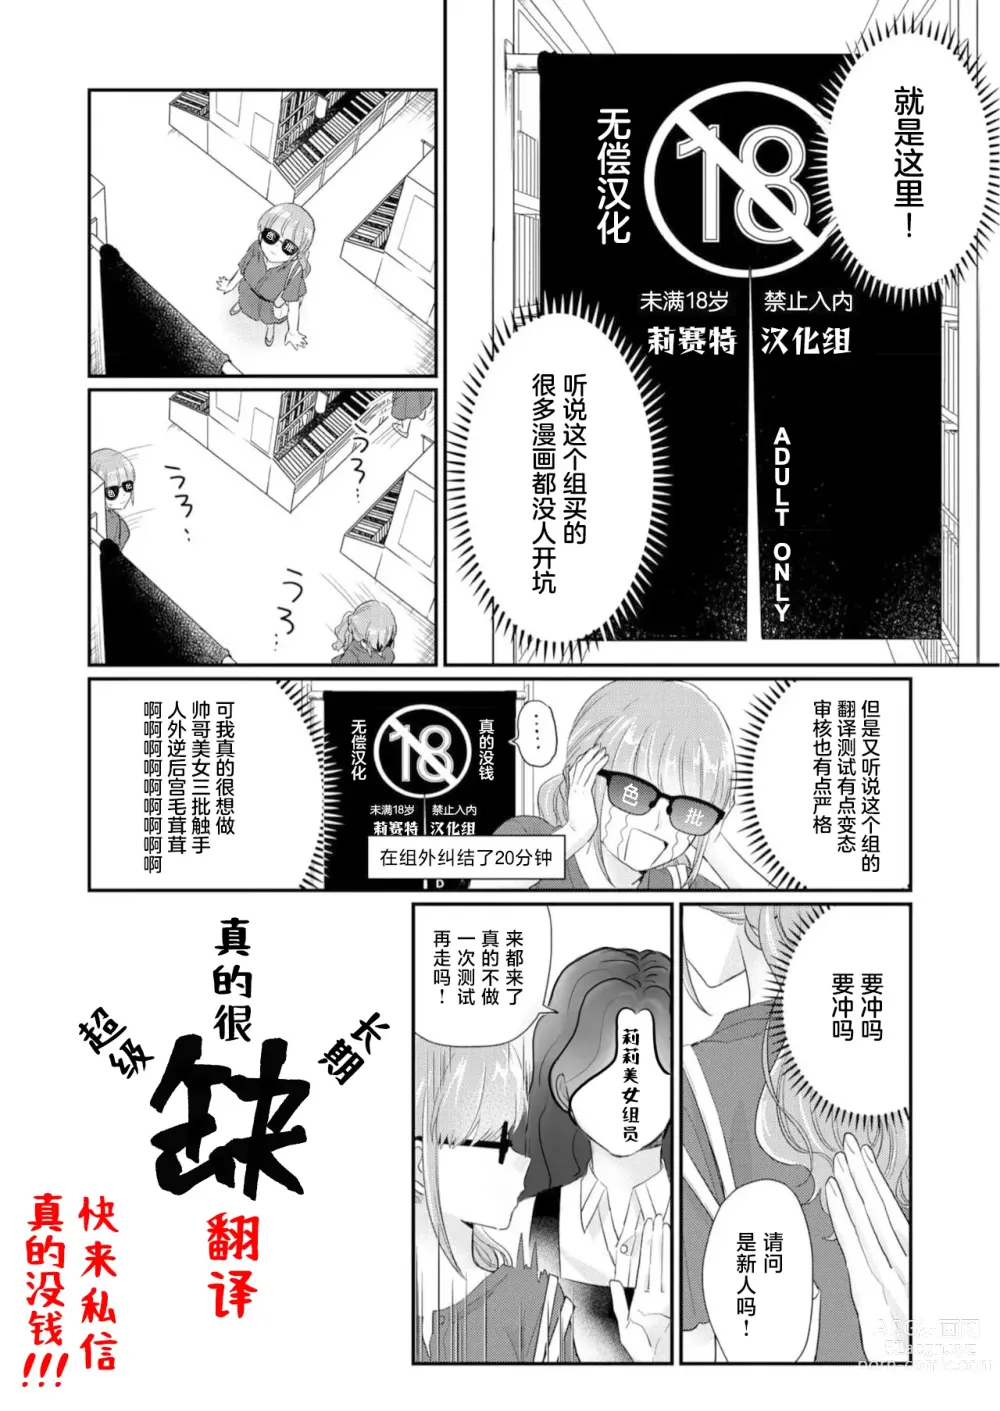 Page 17 of manga 执爱螺旋线